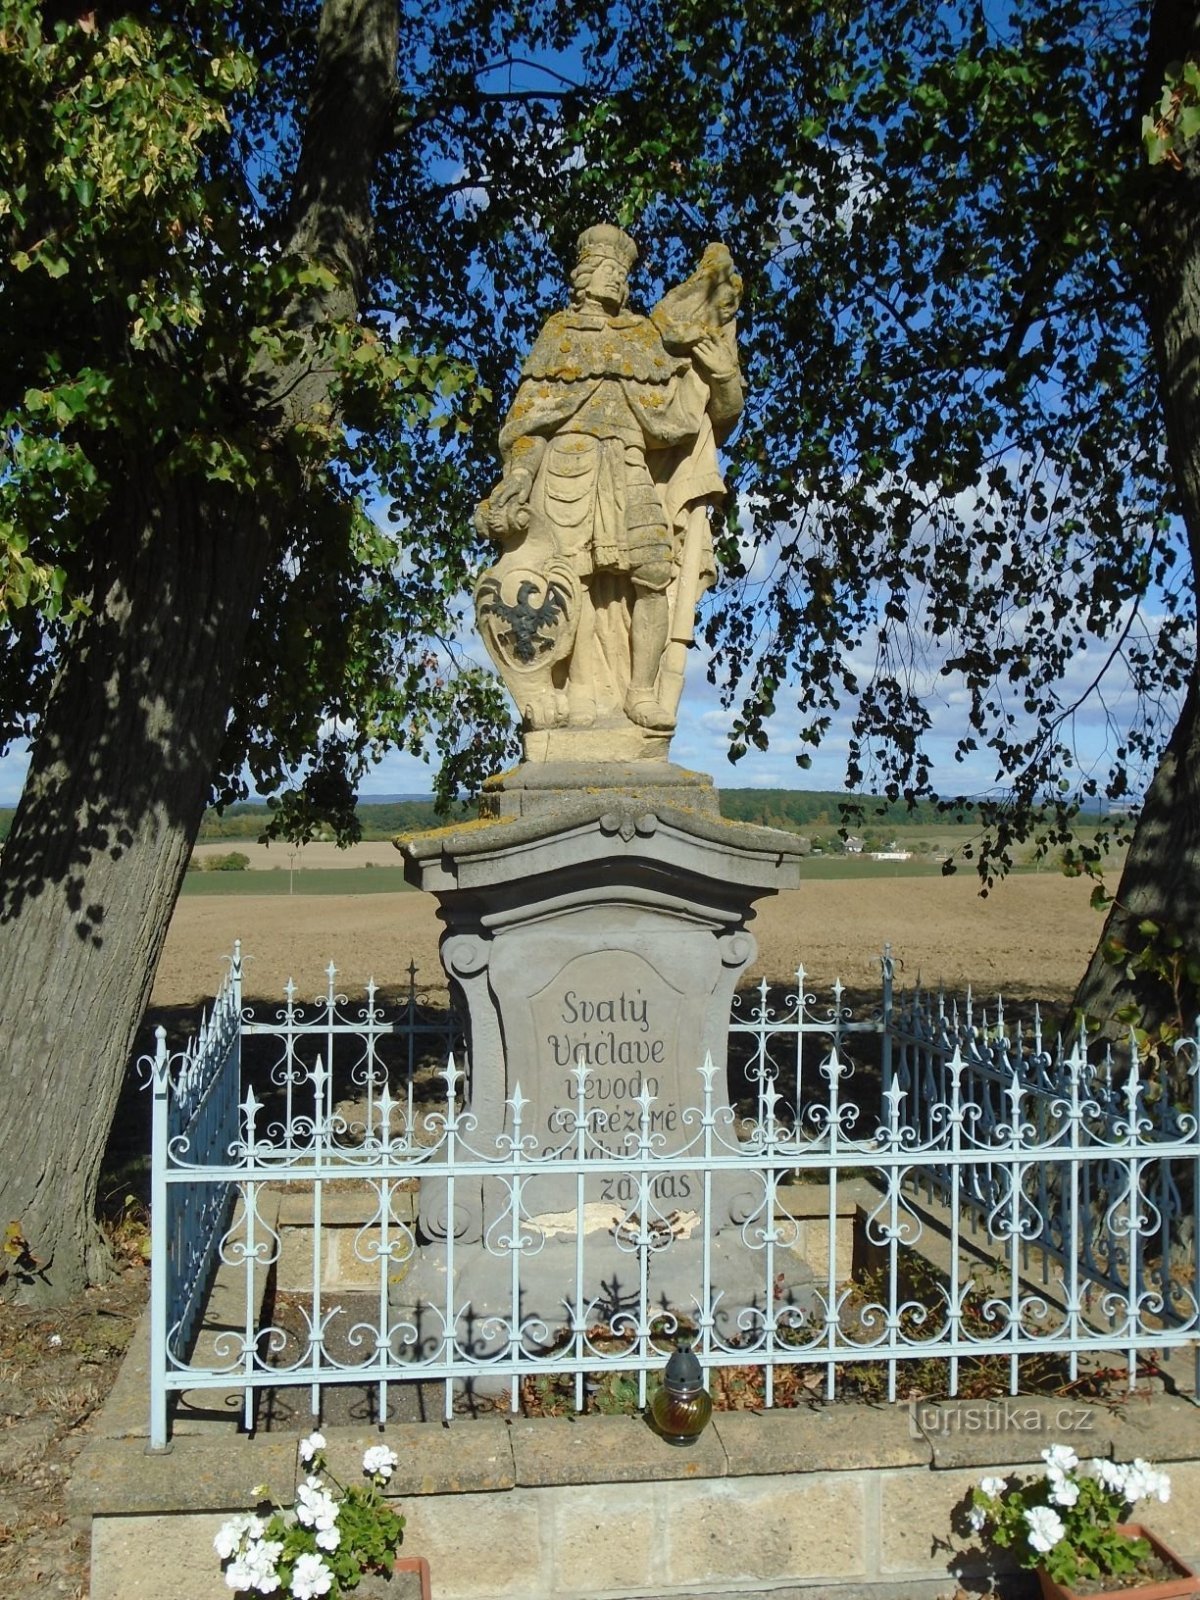 Staty av St. Václav (Petrovice, 29.9.2018/XNUMX/XNUMX)